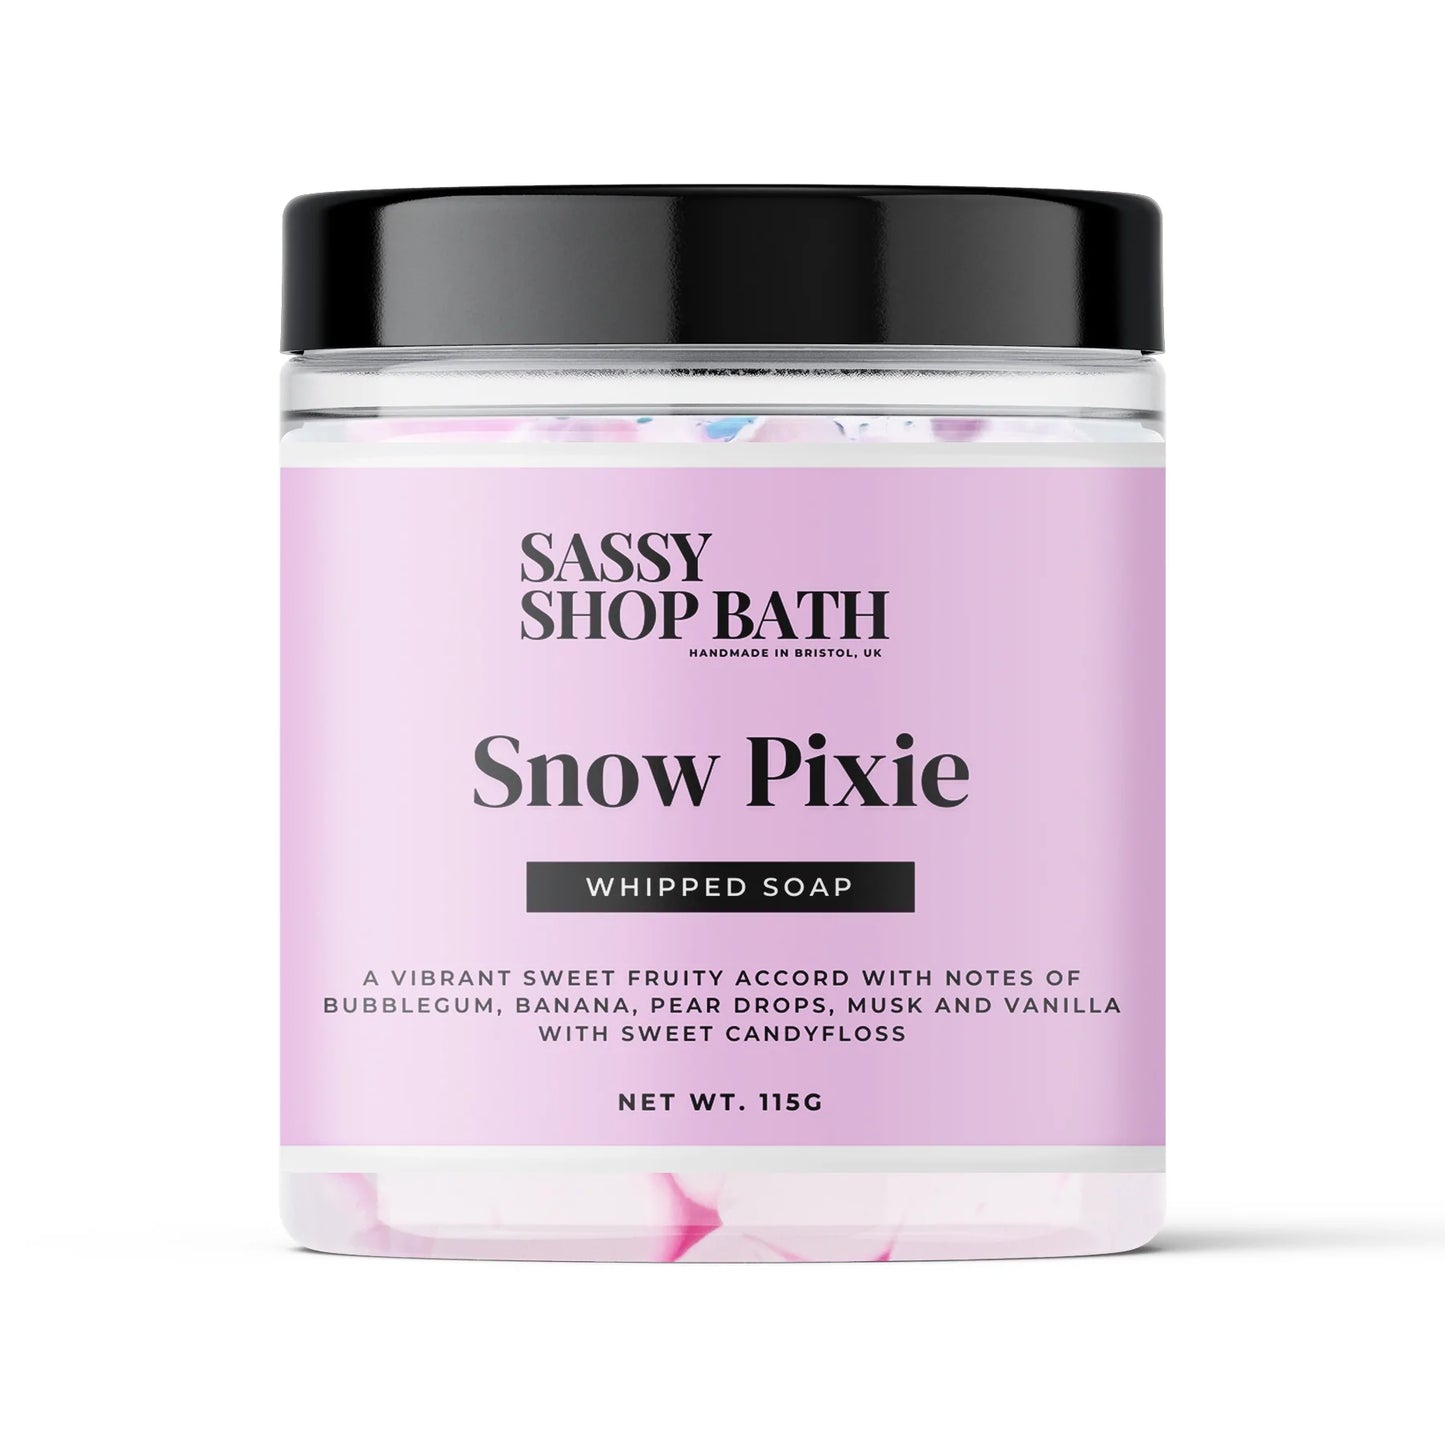 Sassy Shop Bath Whipped Soap - Snow Pixie